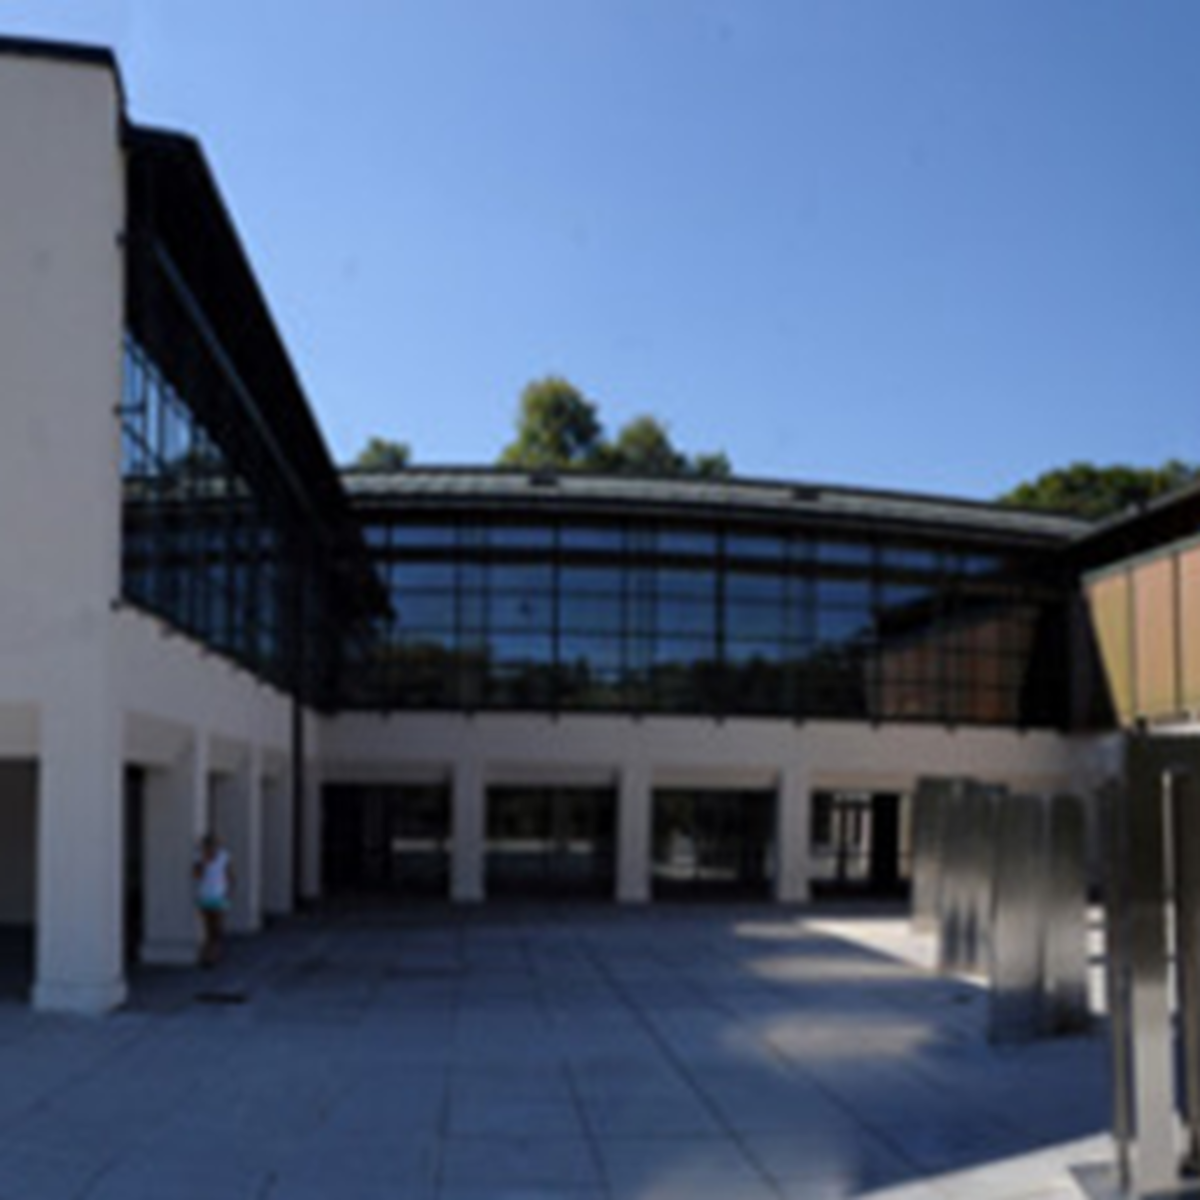 Building at the University of Passau 